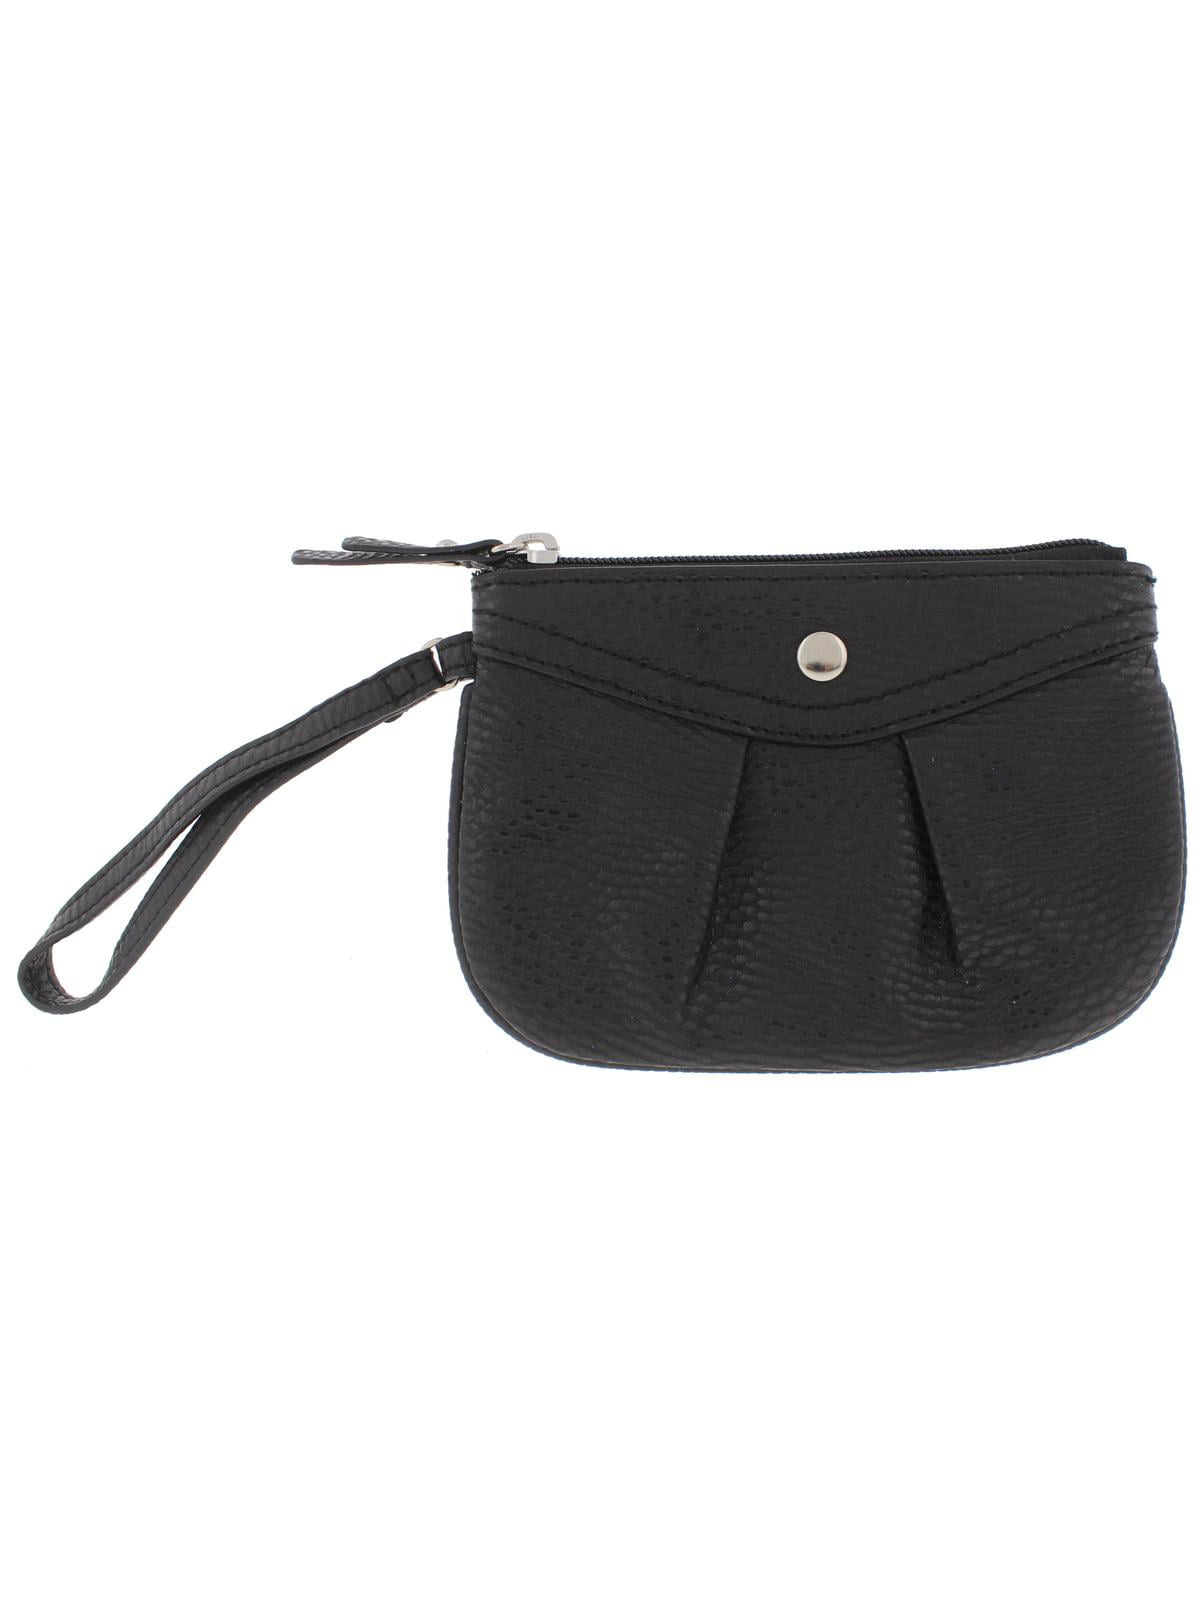 Why do you guys think about the new bags? @Tiffany&Co. #handbagtiktok... |  TikTok